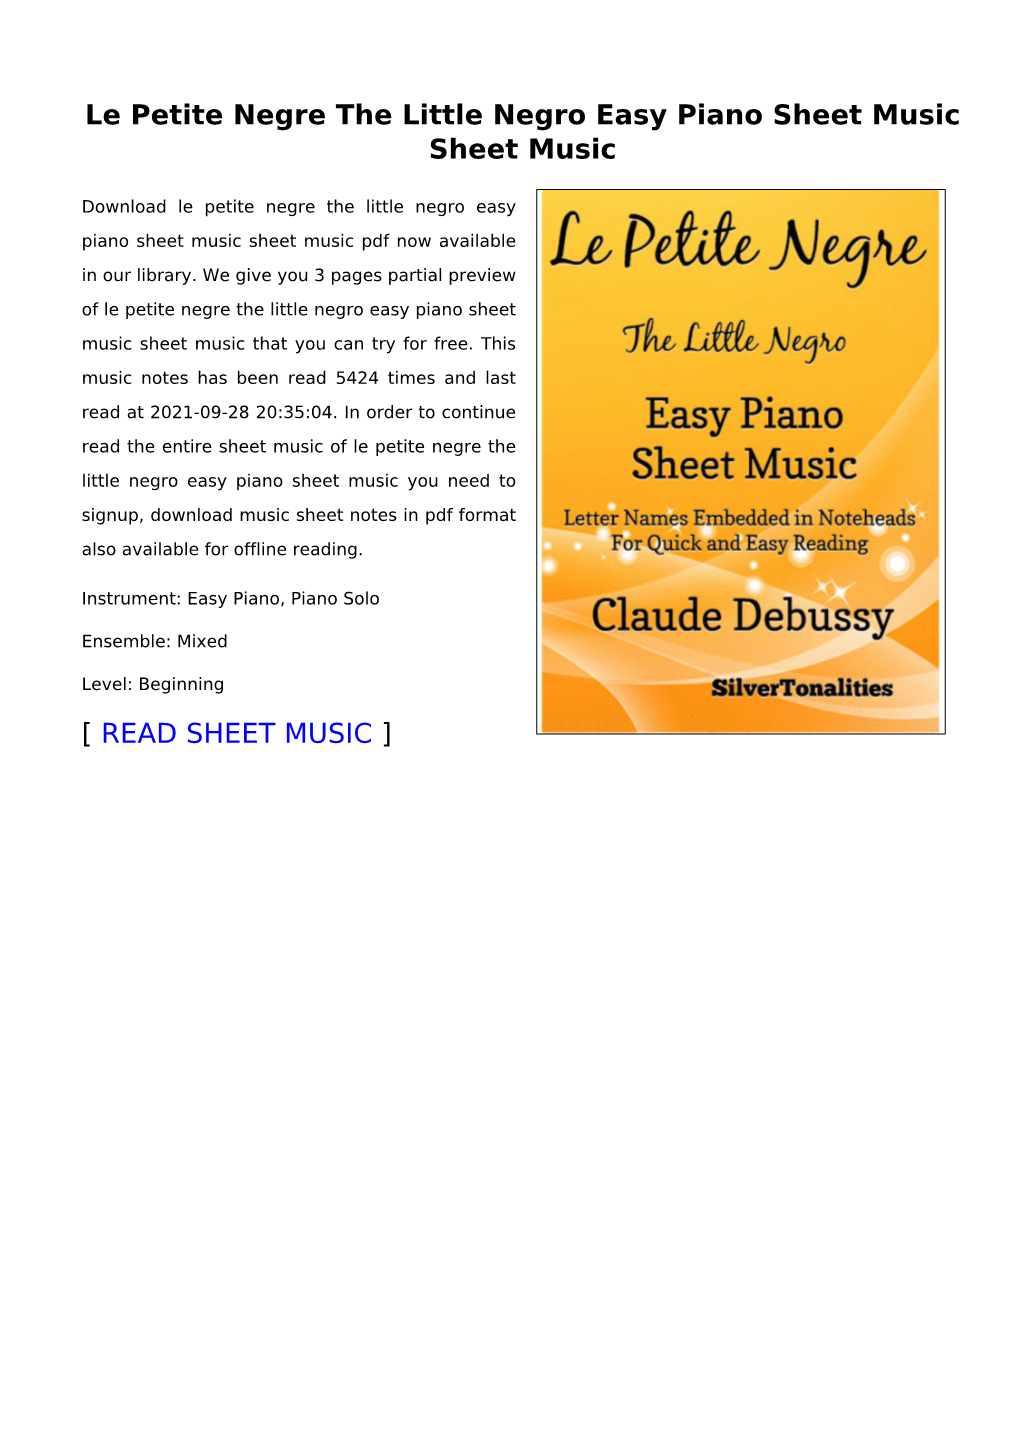 Le Petite Negre the Little Negro Easy Piano Sheet Music Sheet Music